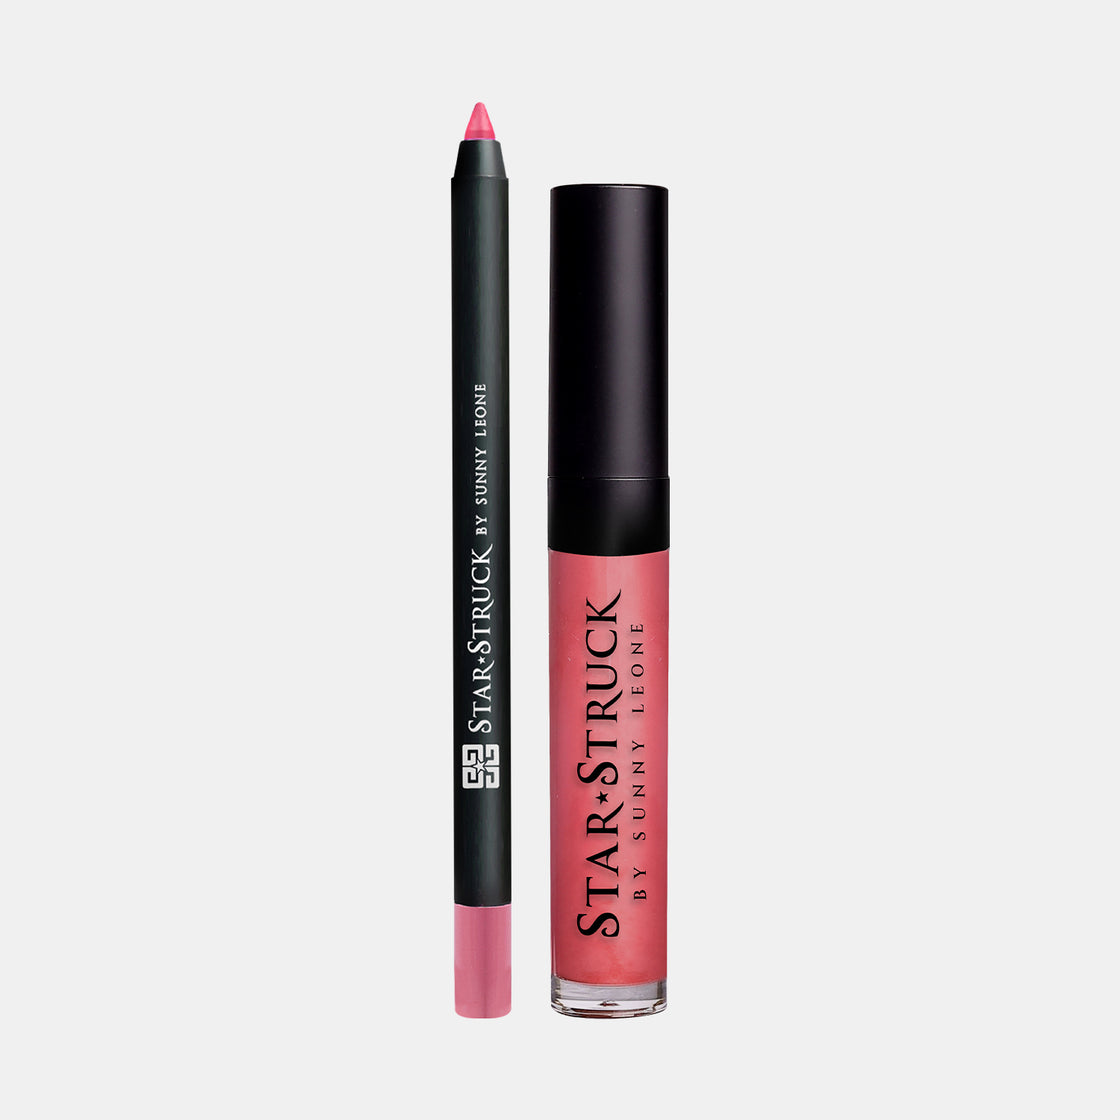 Pink Peony - 2PC Lip Kit-2pc Lipkit-cruelty free cosmetics-Sunny Leone